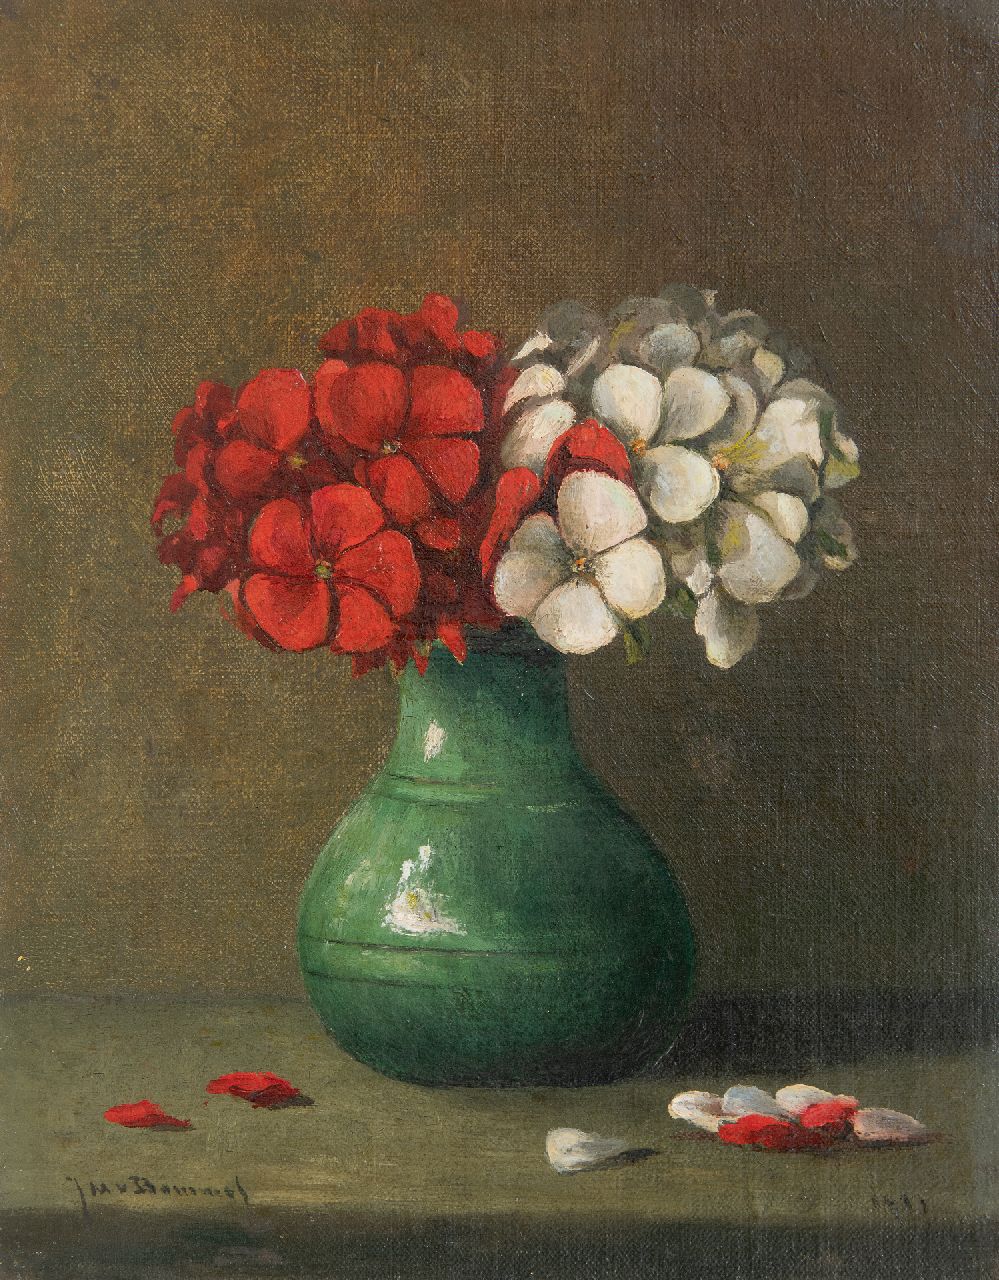 Bommel J.M. van | Jacobus Marinus van Bommel, Rode en witte geranium in groen vaasje, olieverf op doek op paneel 23,0 x 18,1 cm, gesigneerd linksonder en gedateerd 1917